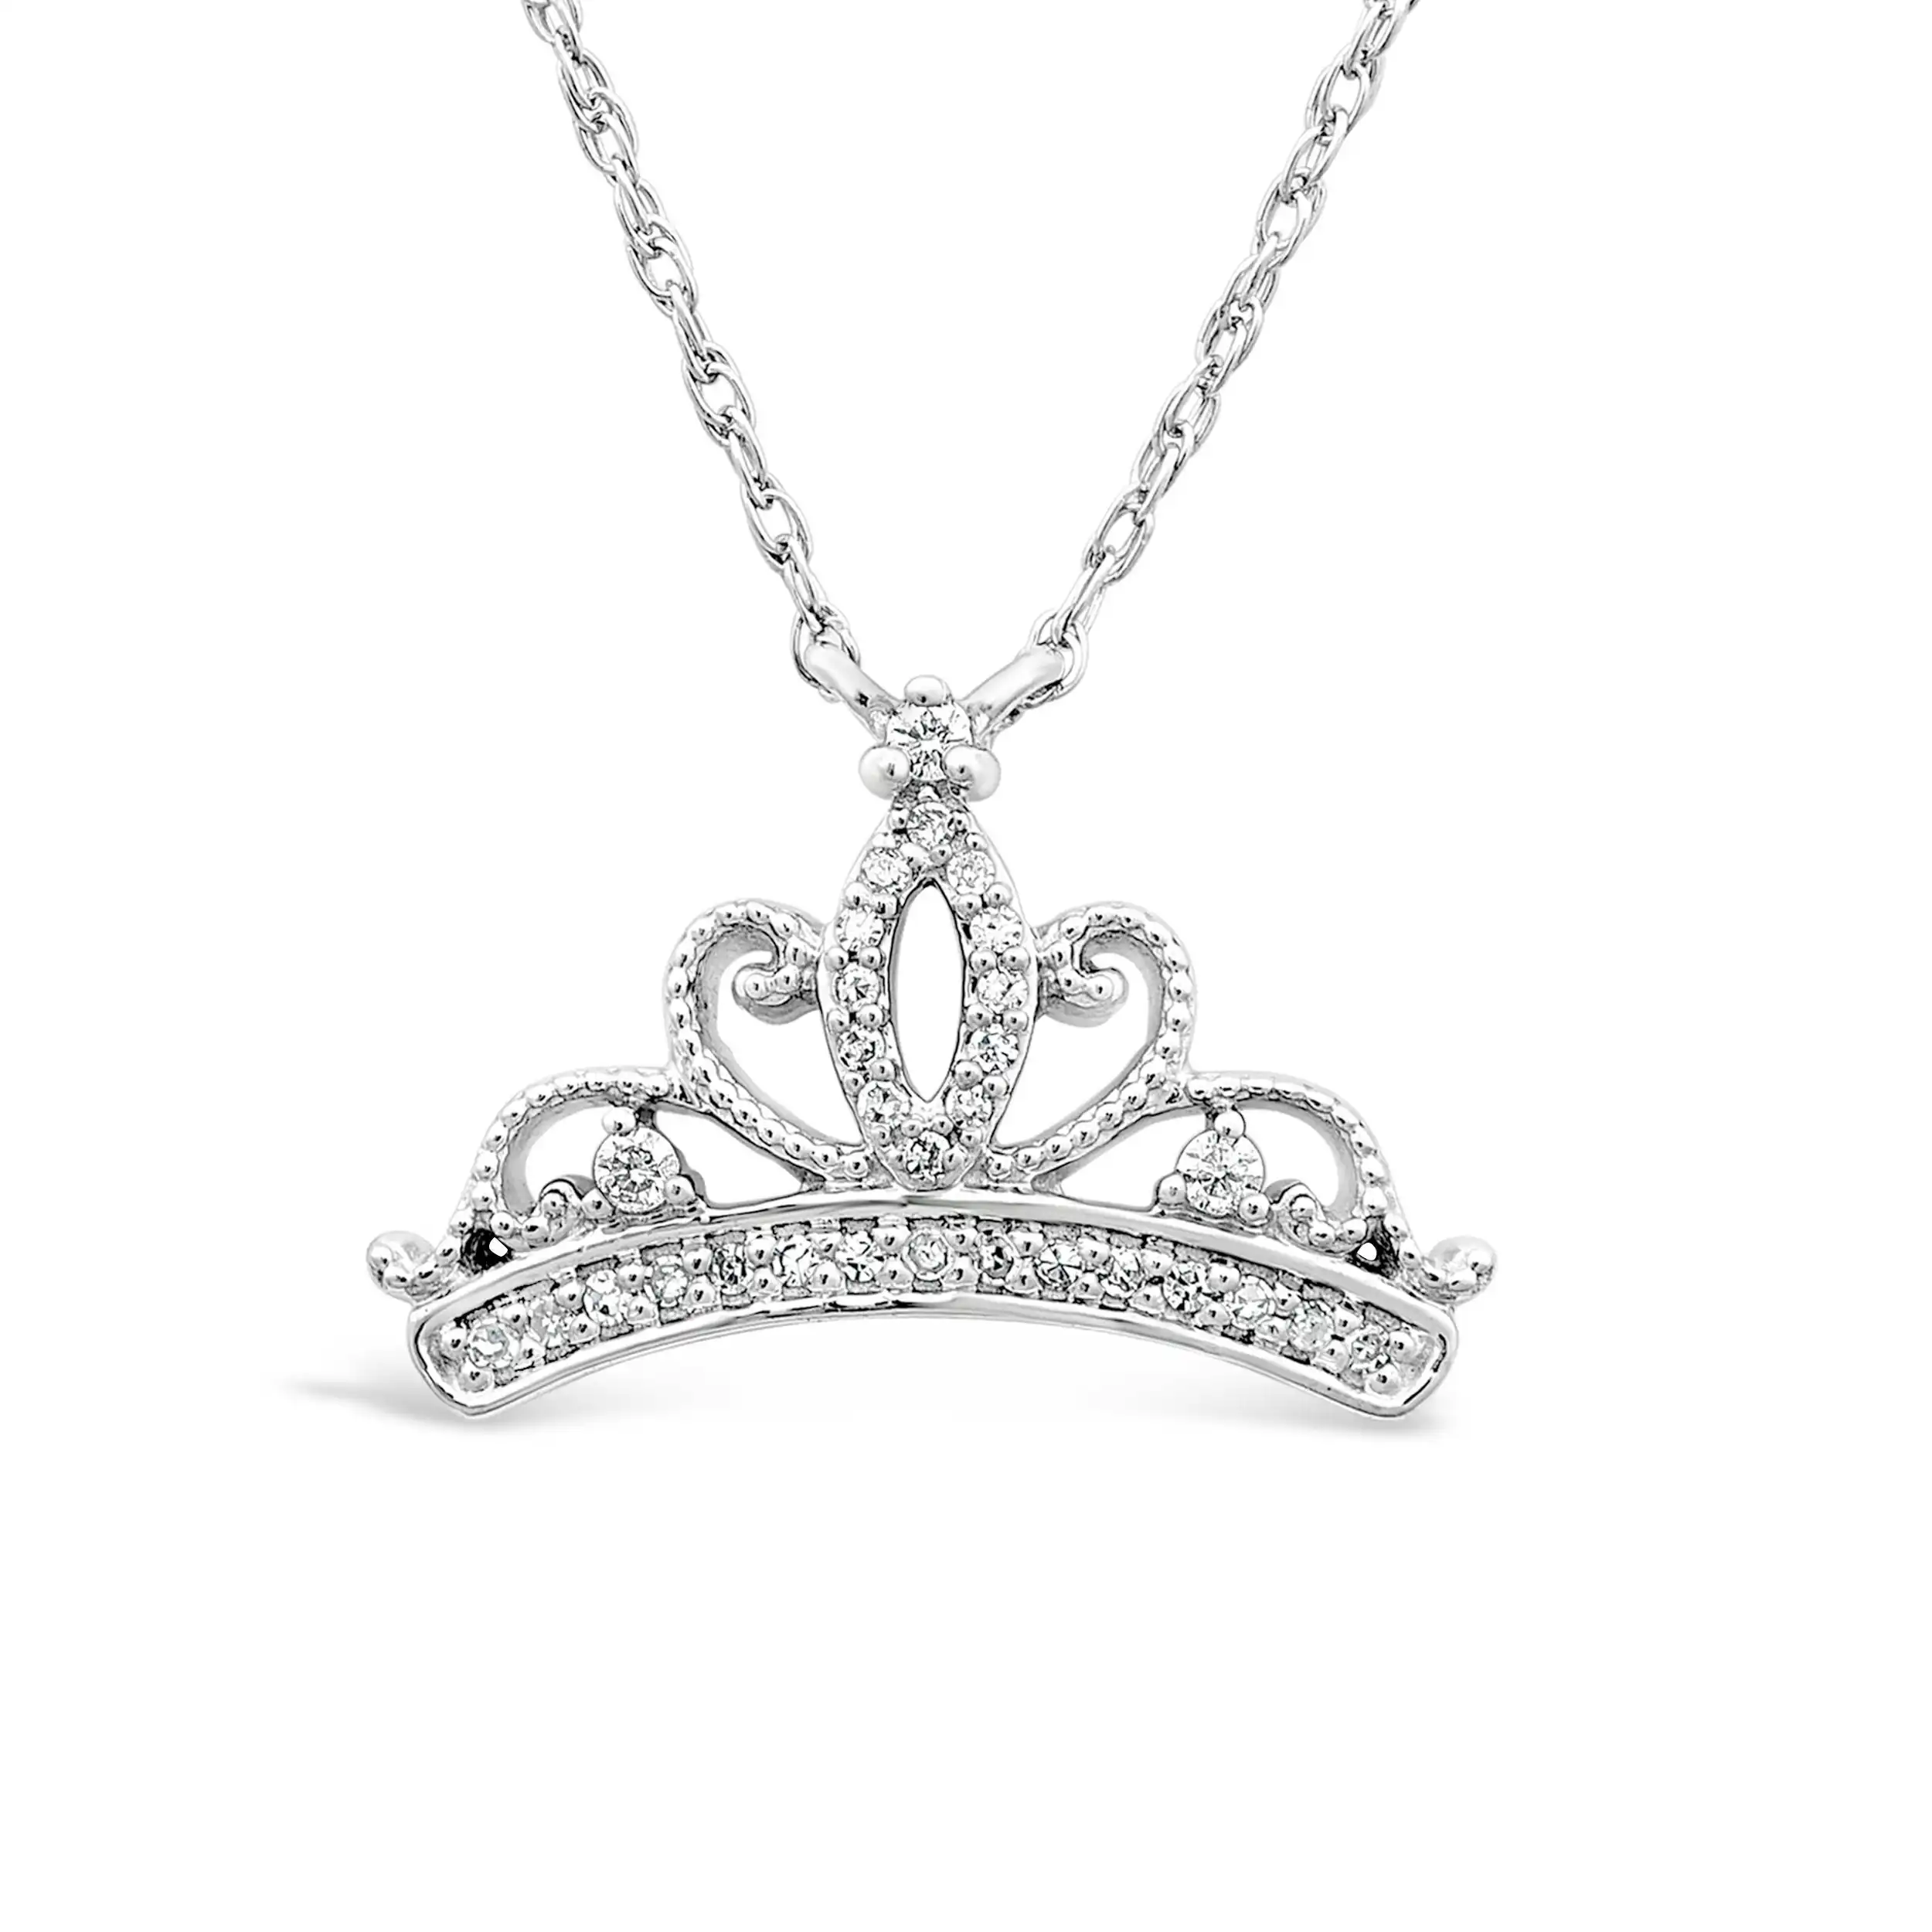 Children's Diamond Princess Tiara Necklace in Sterling Silver